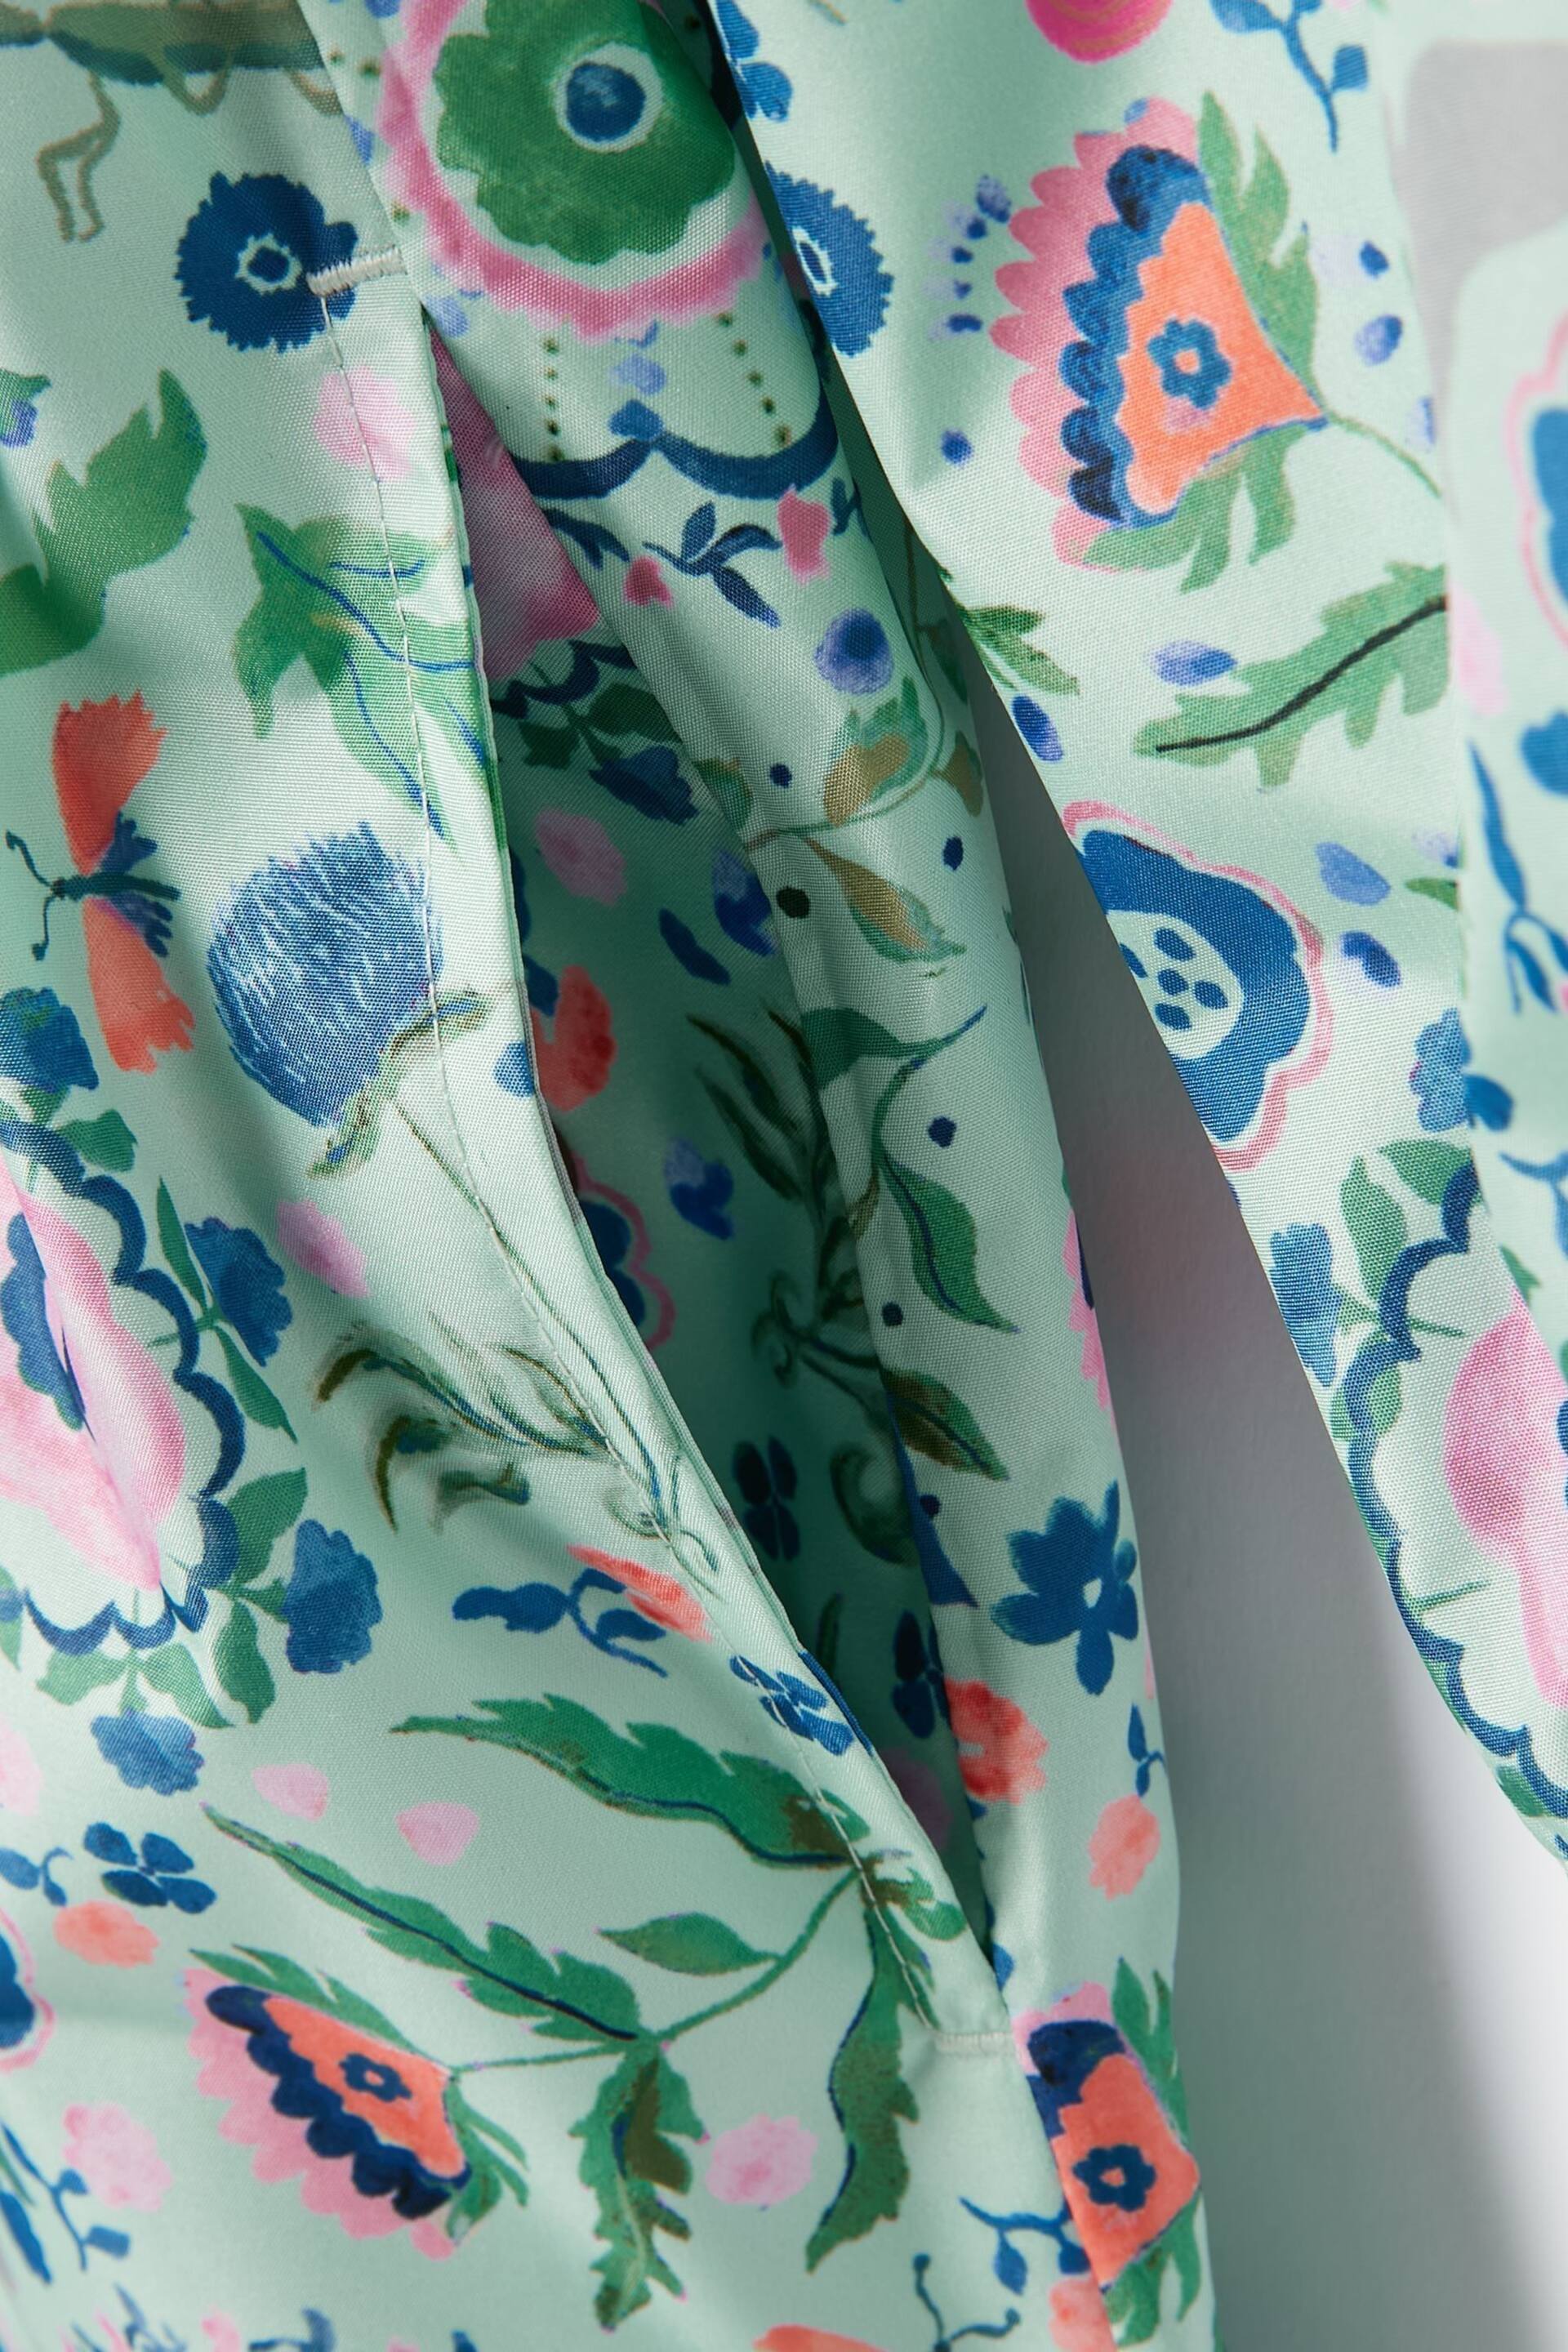 Joules Rainford Green Floral Waterproof Packable Raincoat With Hood - Image 6 of 8